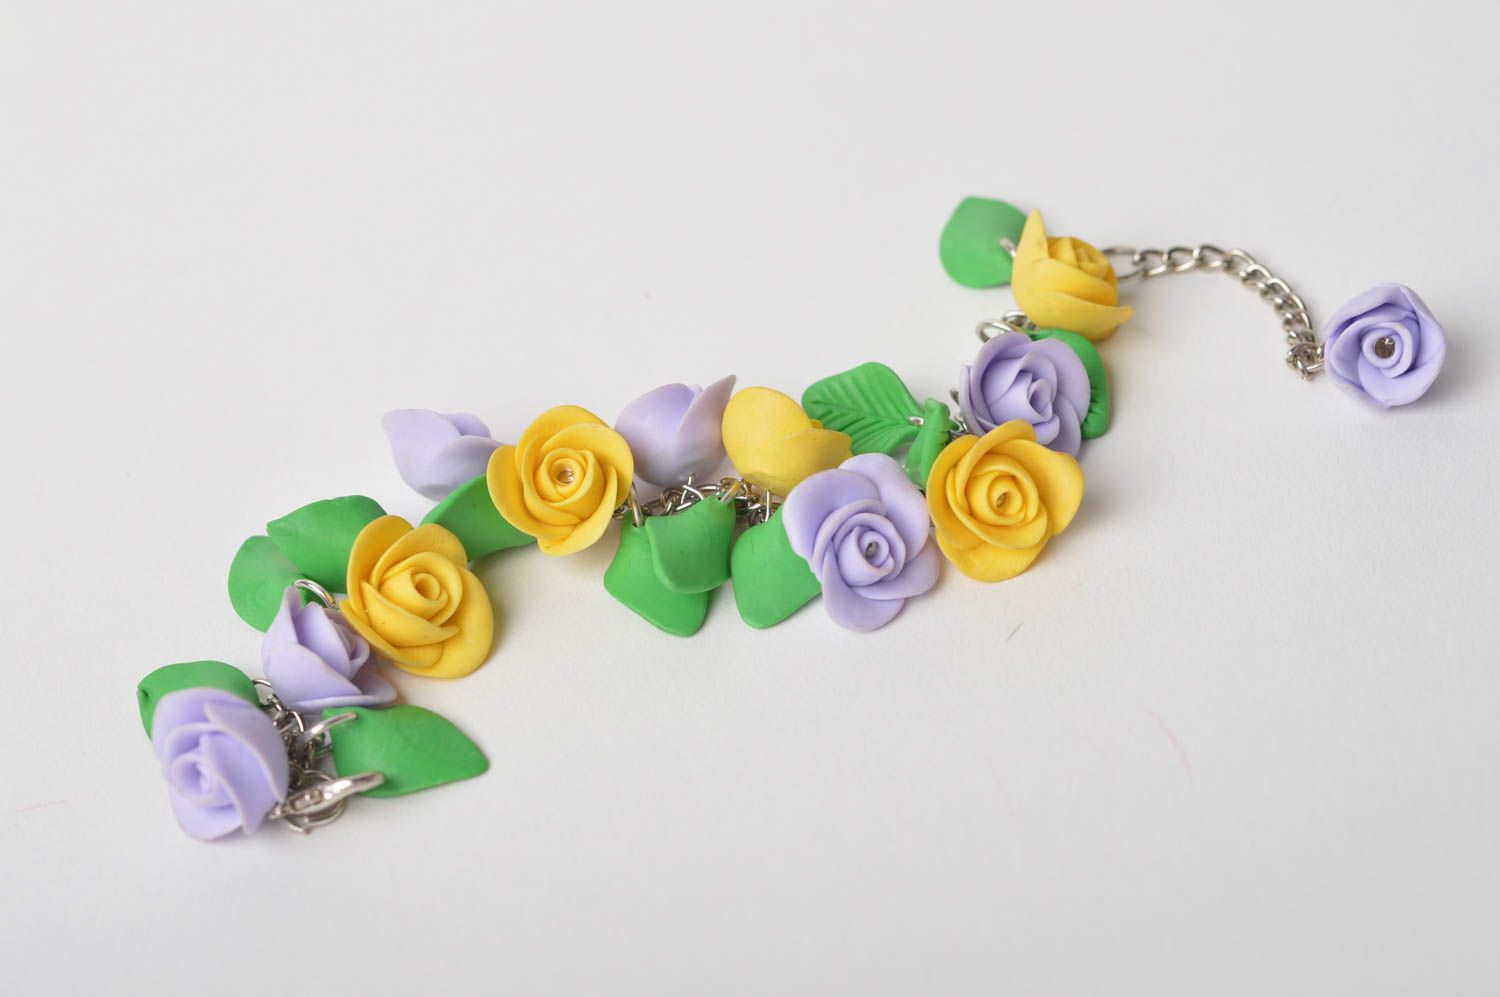 Stylish handmade plastic pendant charm jewelry designs accessories for girls photo 3